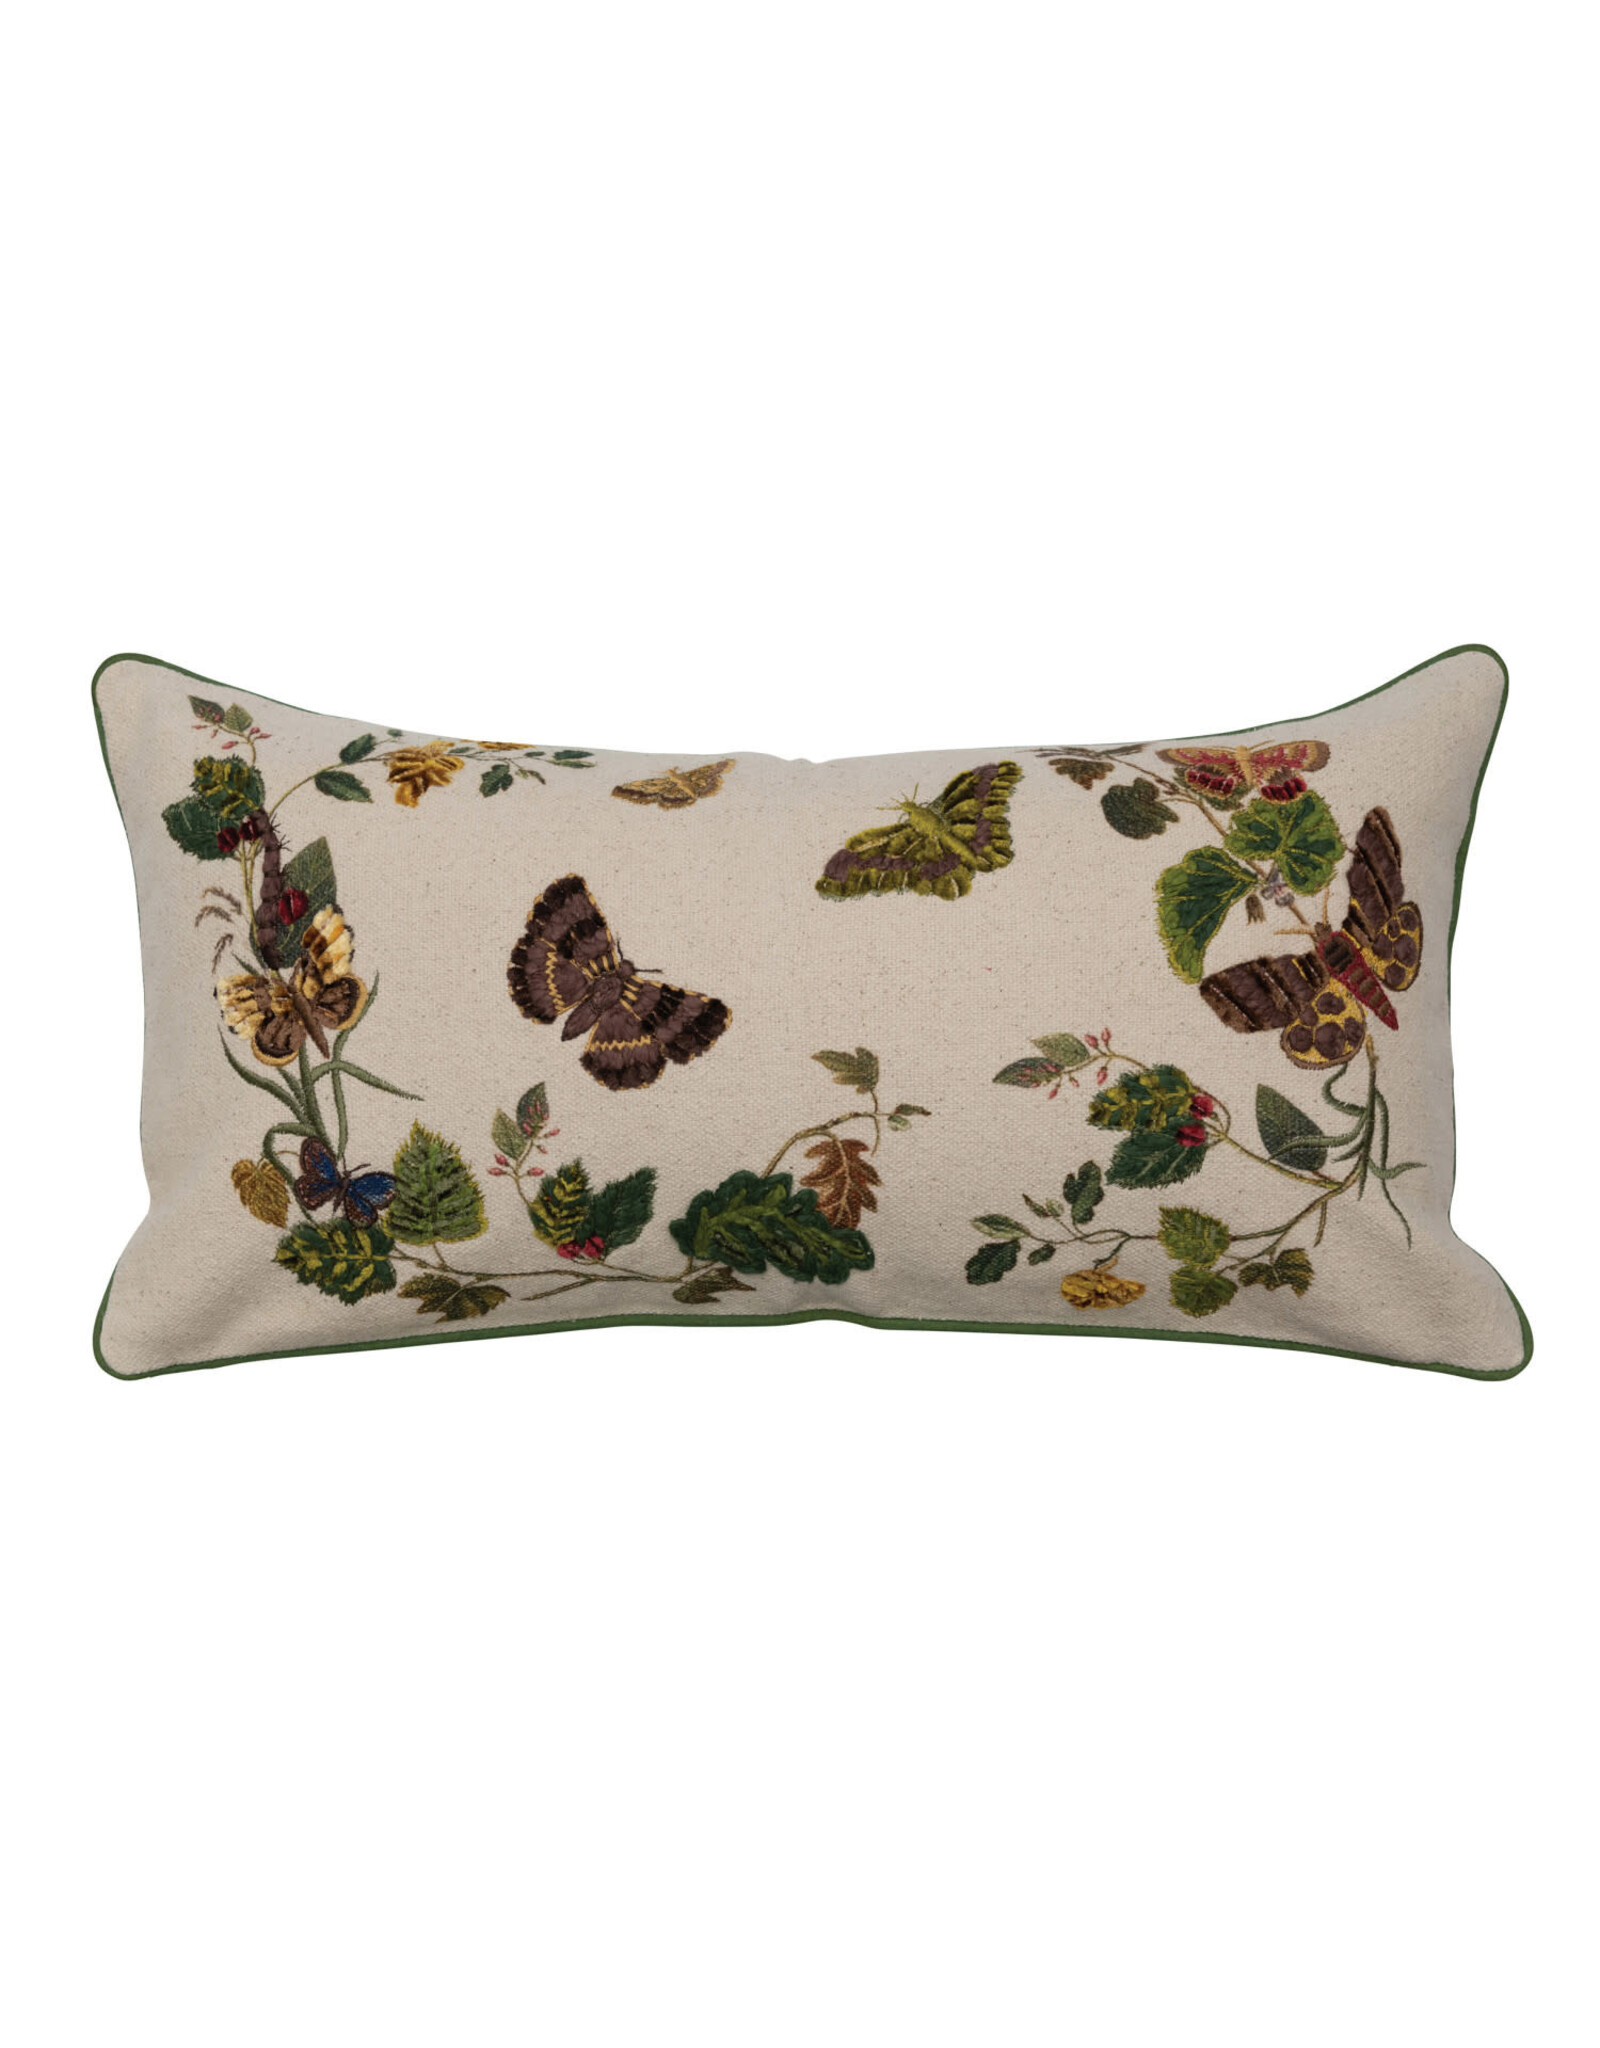 24" x 12" Cotton Lumbar Pillow w/ Butterflies, Flowers, Embroidery & Piping DF6539